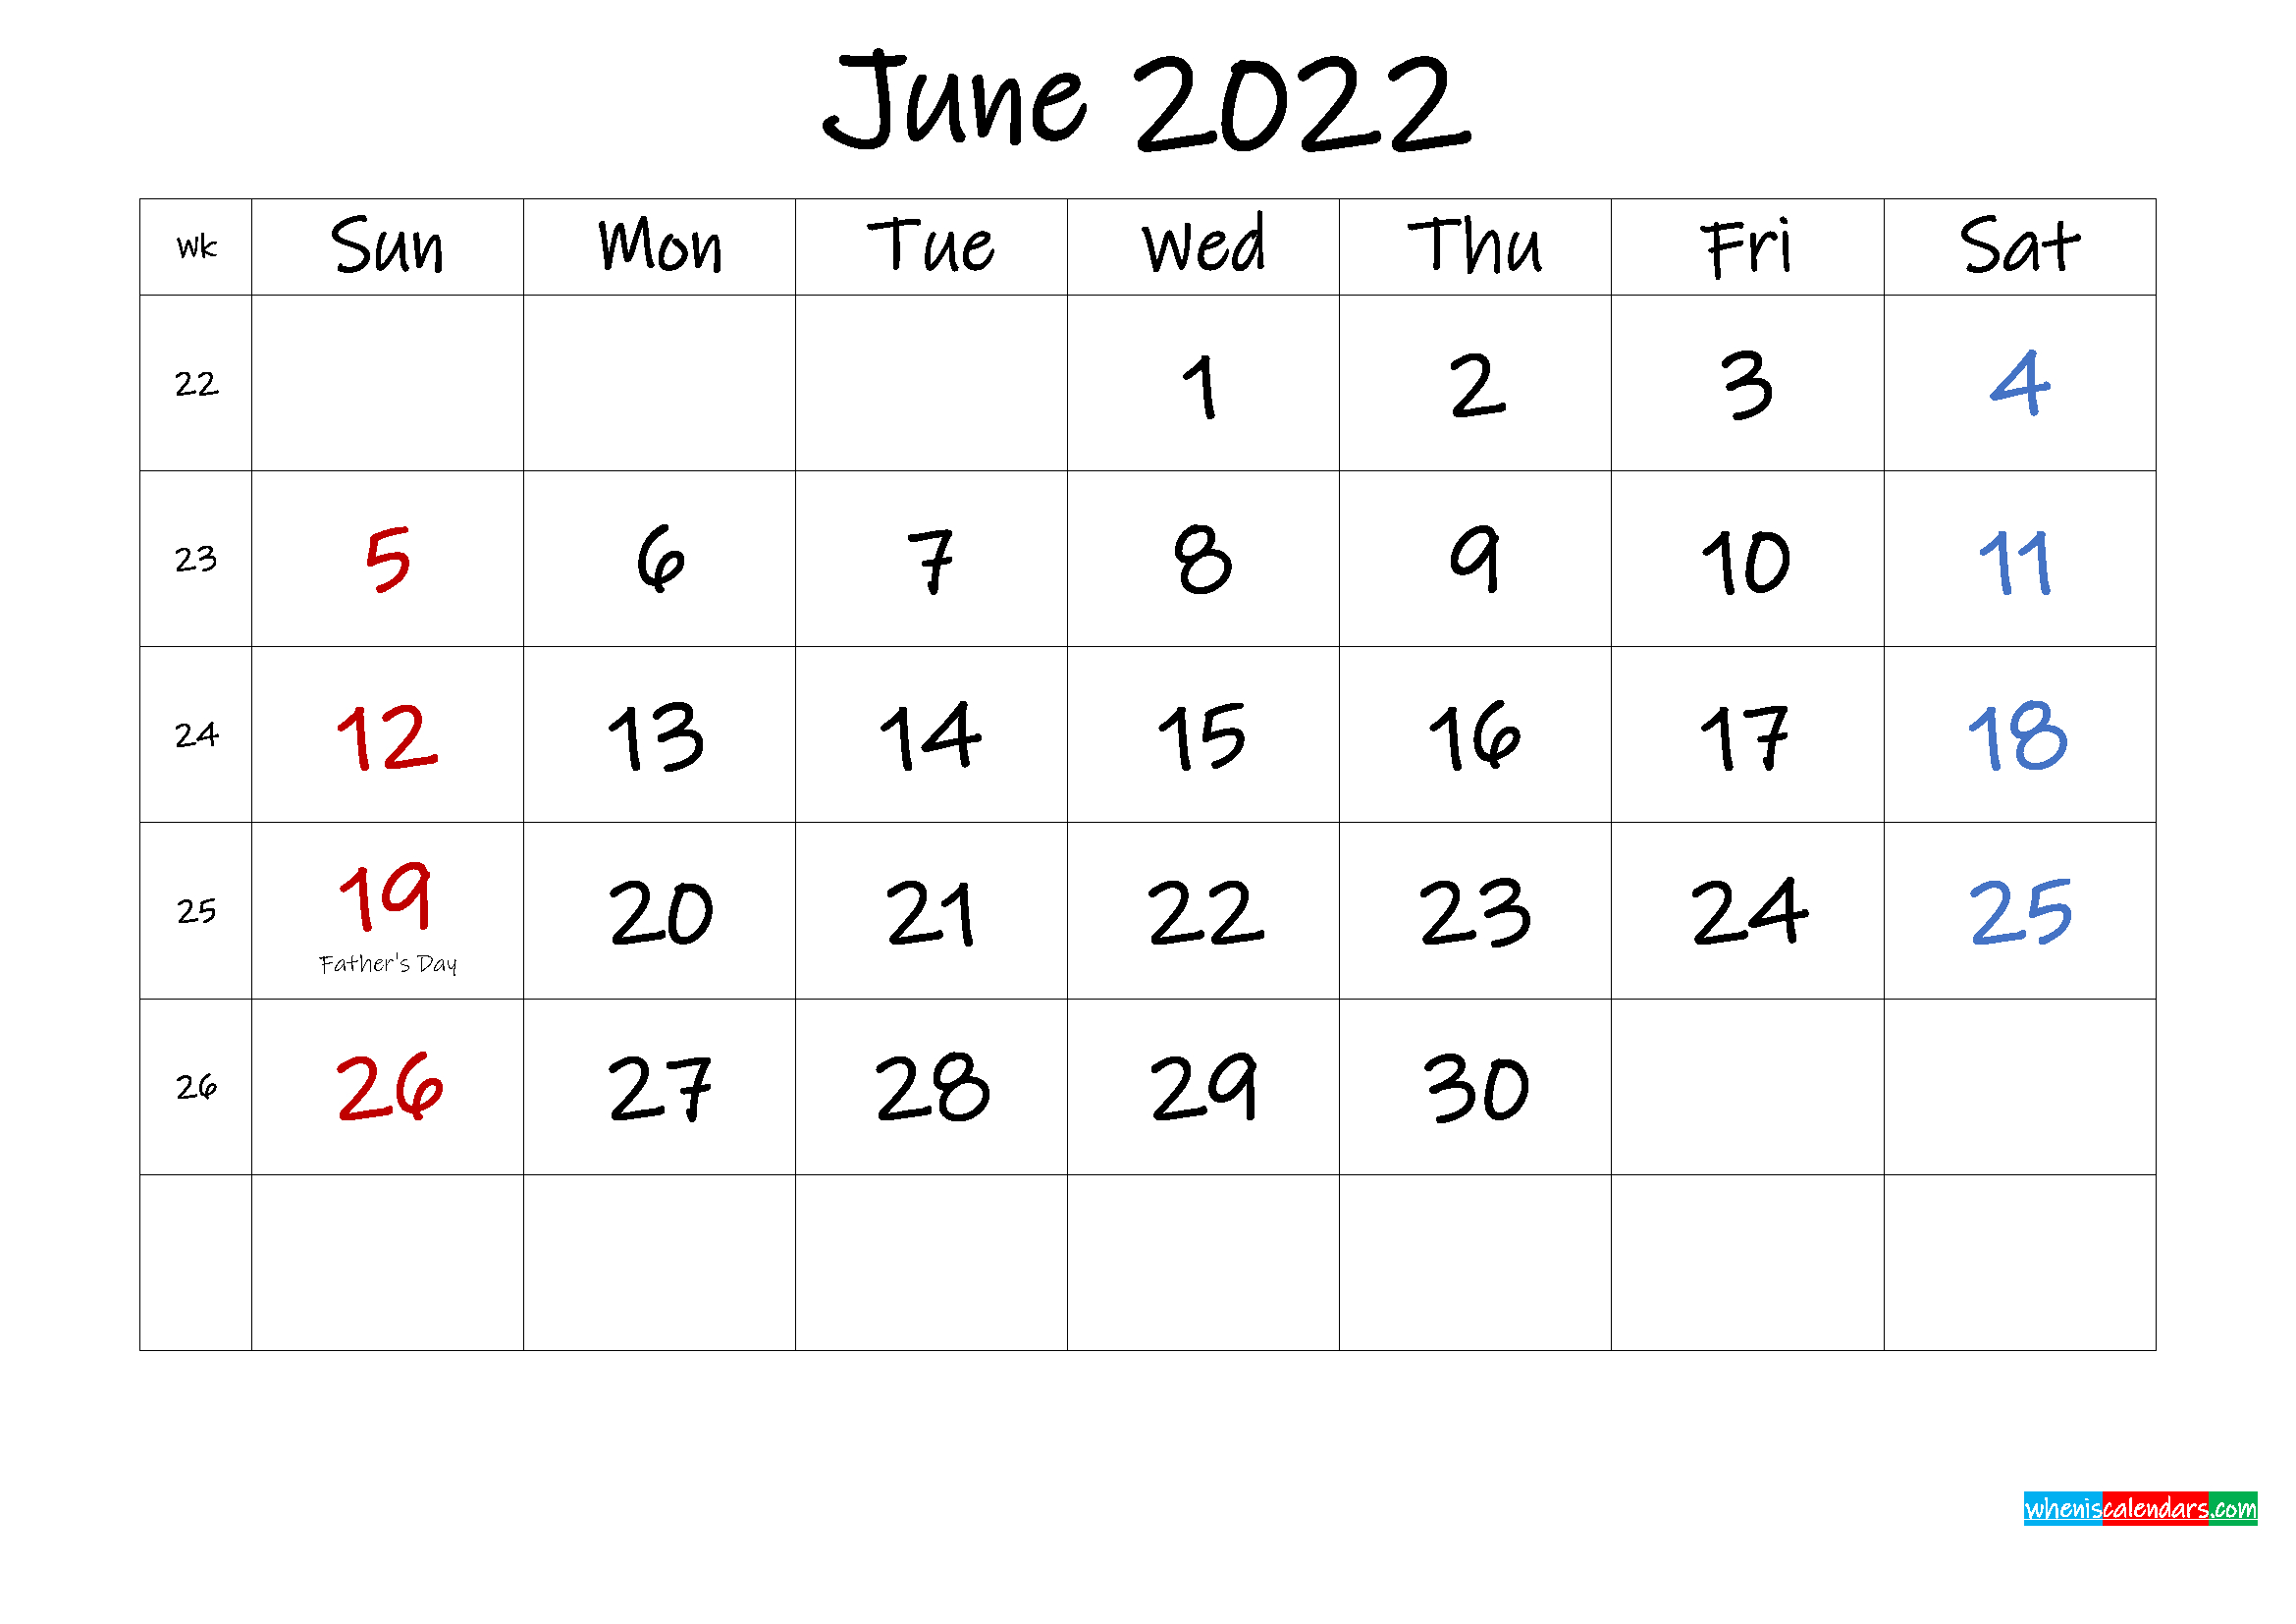 June 2022 Free Printable Calendar With Holidays - Template  Calendar For June 2022 With Holidays